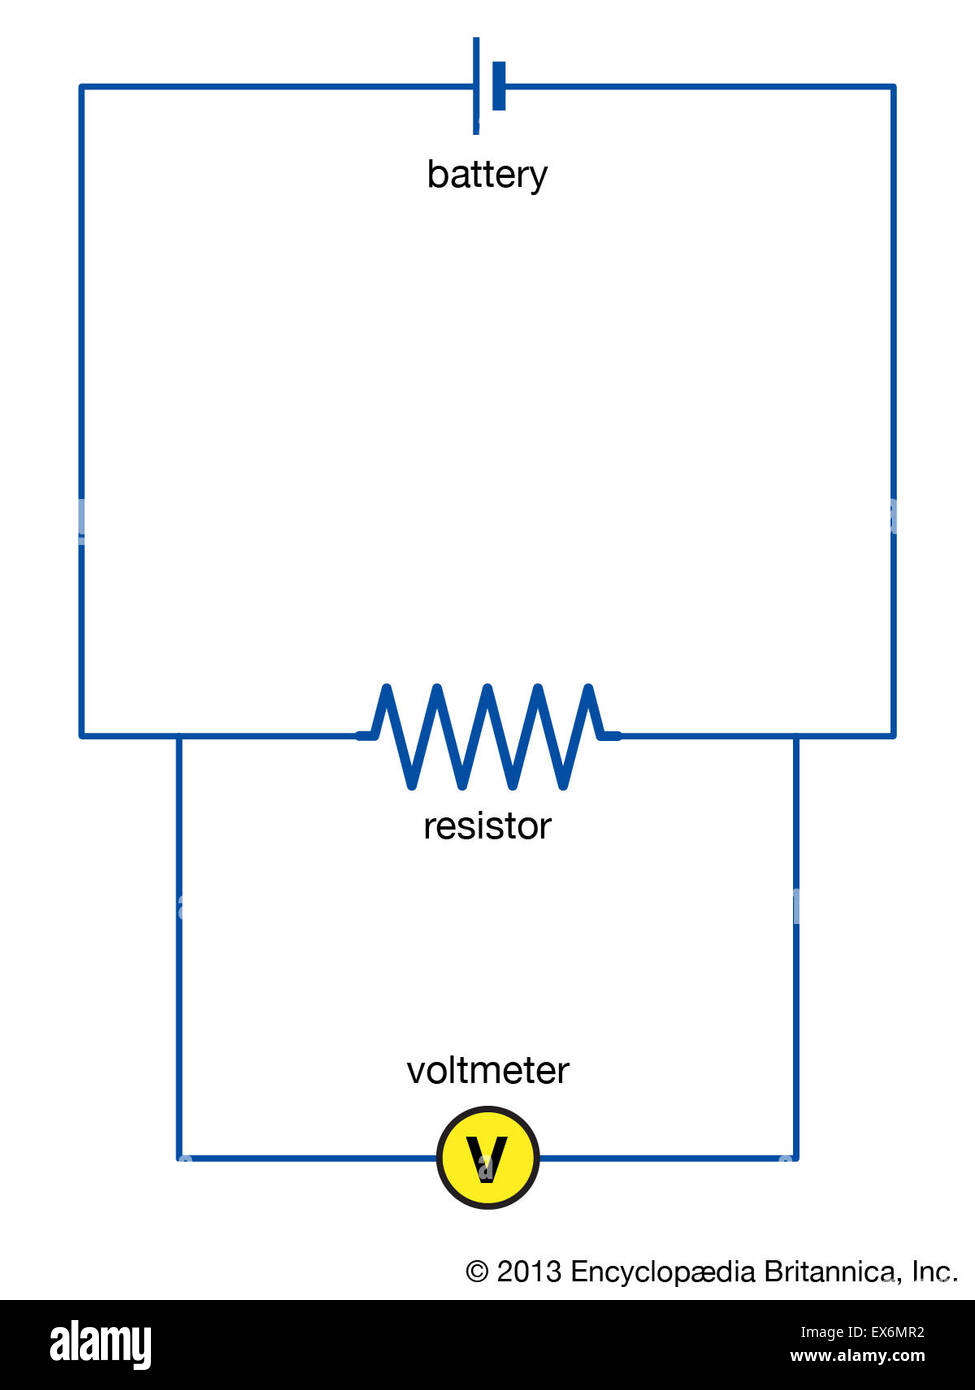 basic electrical circuits diagrams